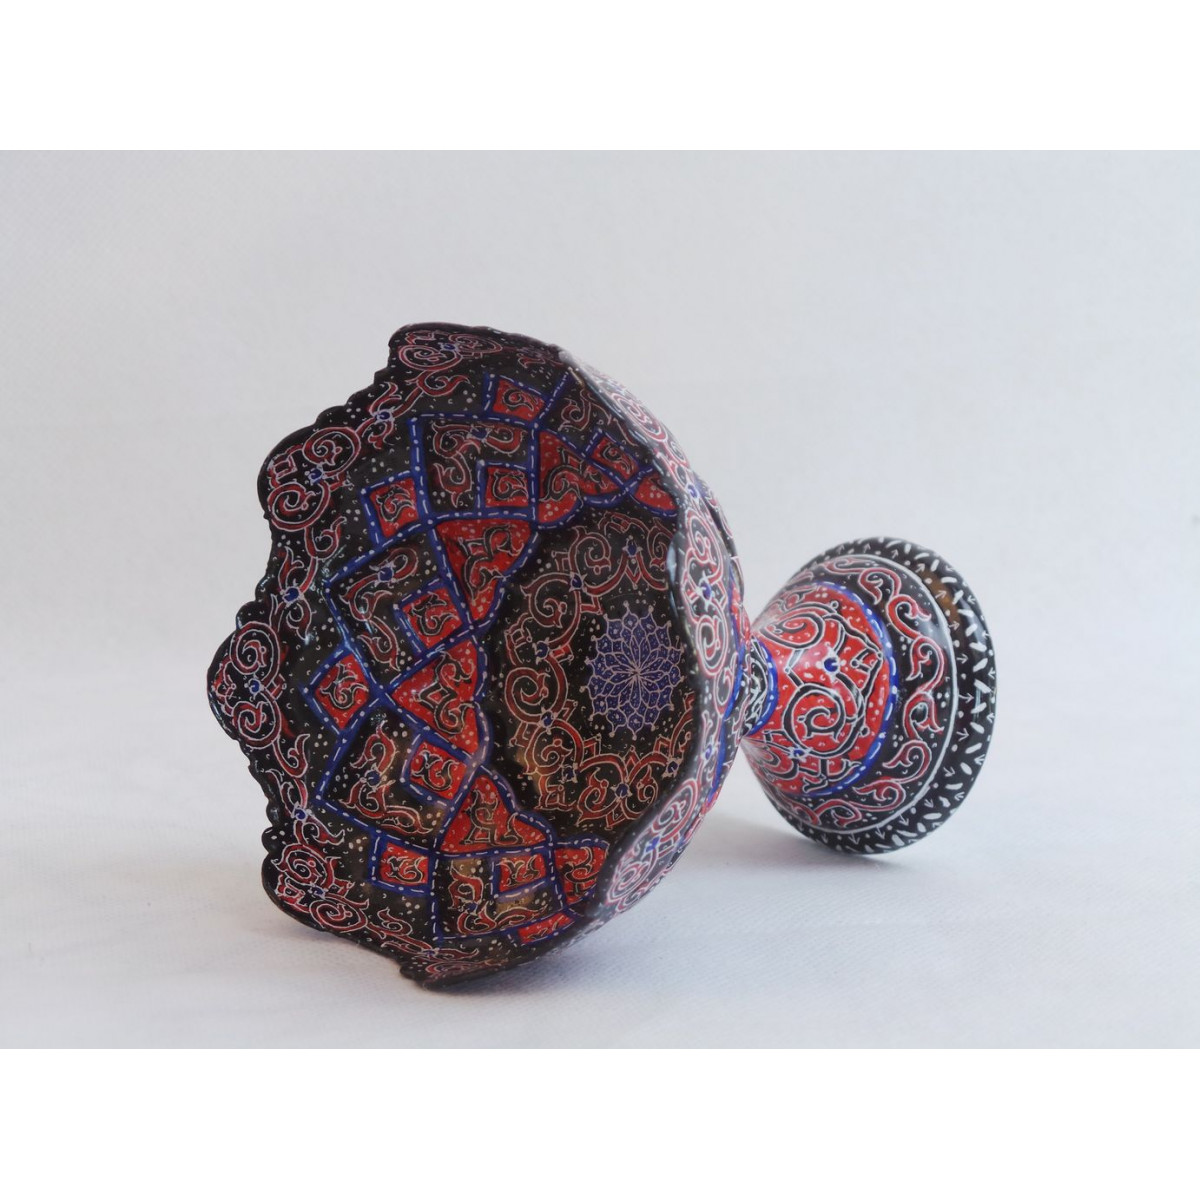 Enamel on Copper Pedestal Candy/Nut Bowl Dish - HE3002-Persian Handicrafts